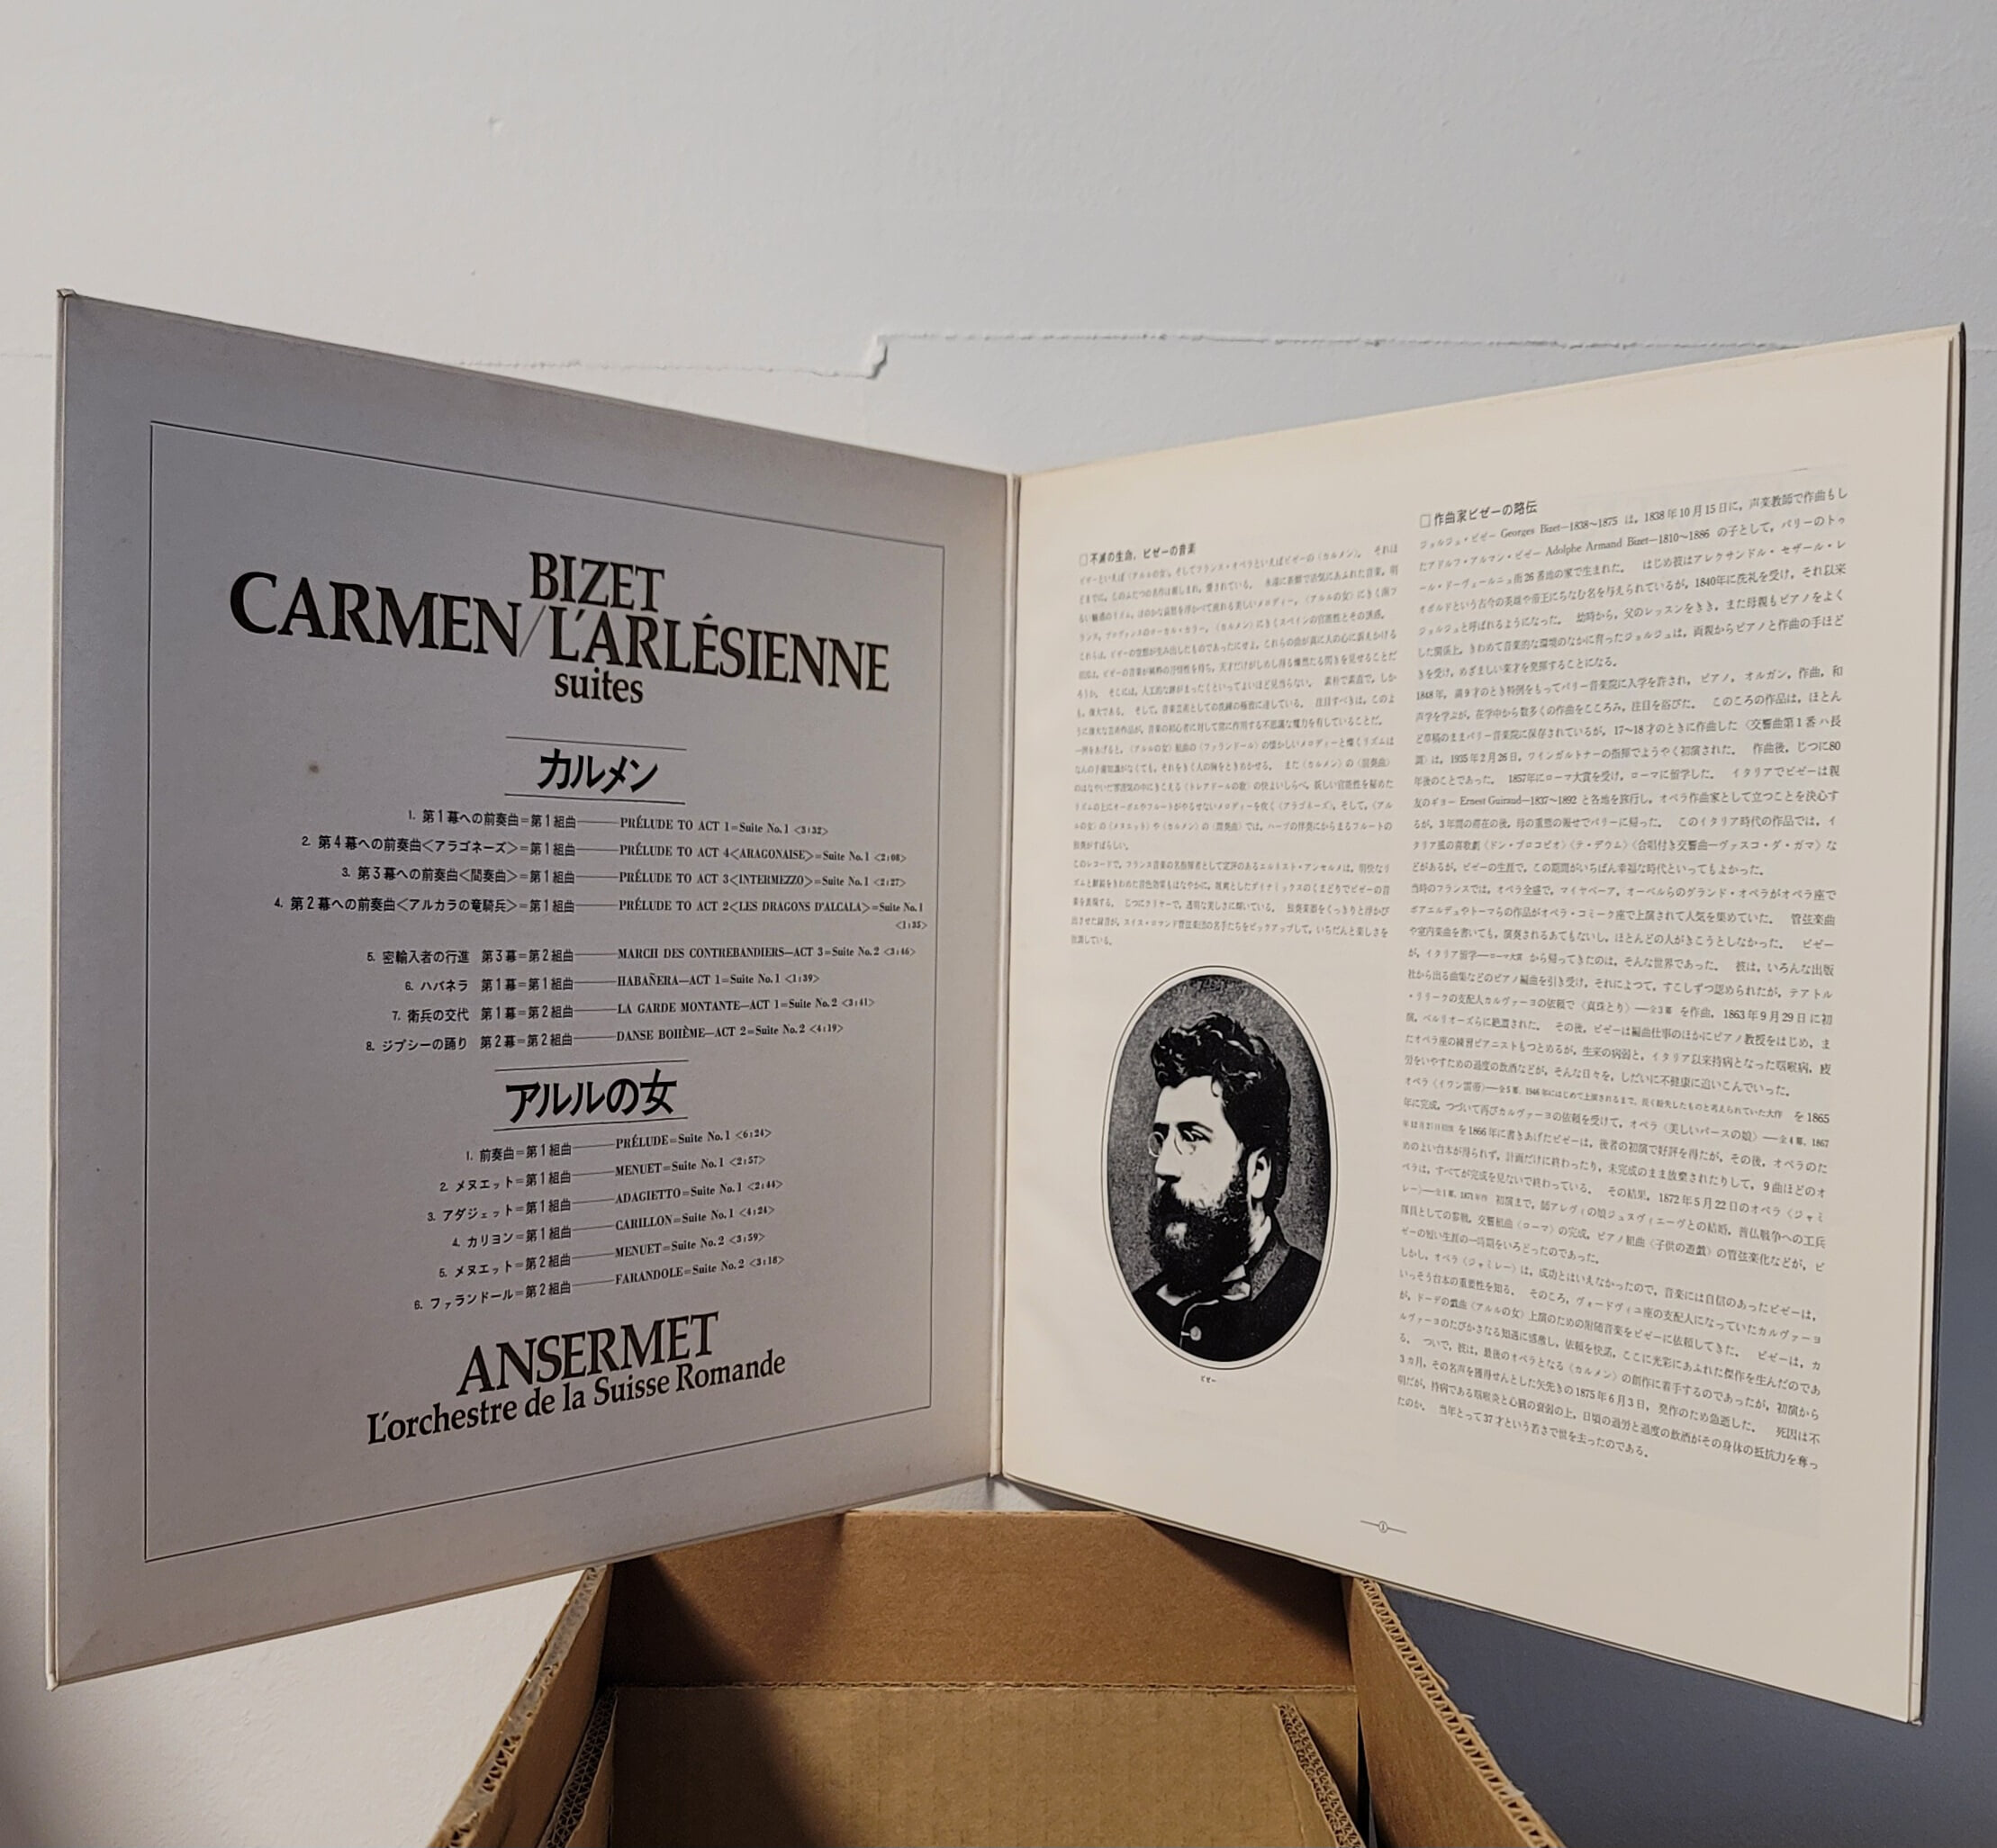 [LP] 66년 Bizet Carmen L'arlesienne Suites Ansermet 비제 카르멘 아를의 여인 조곡 앙세르메 [일본반] 게이트폴드 1966년